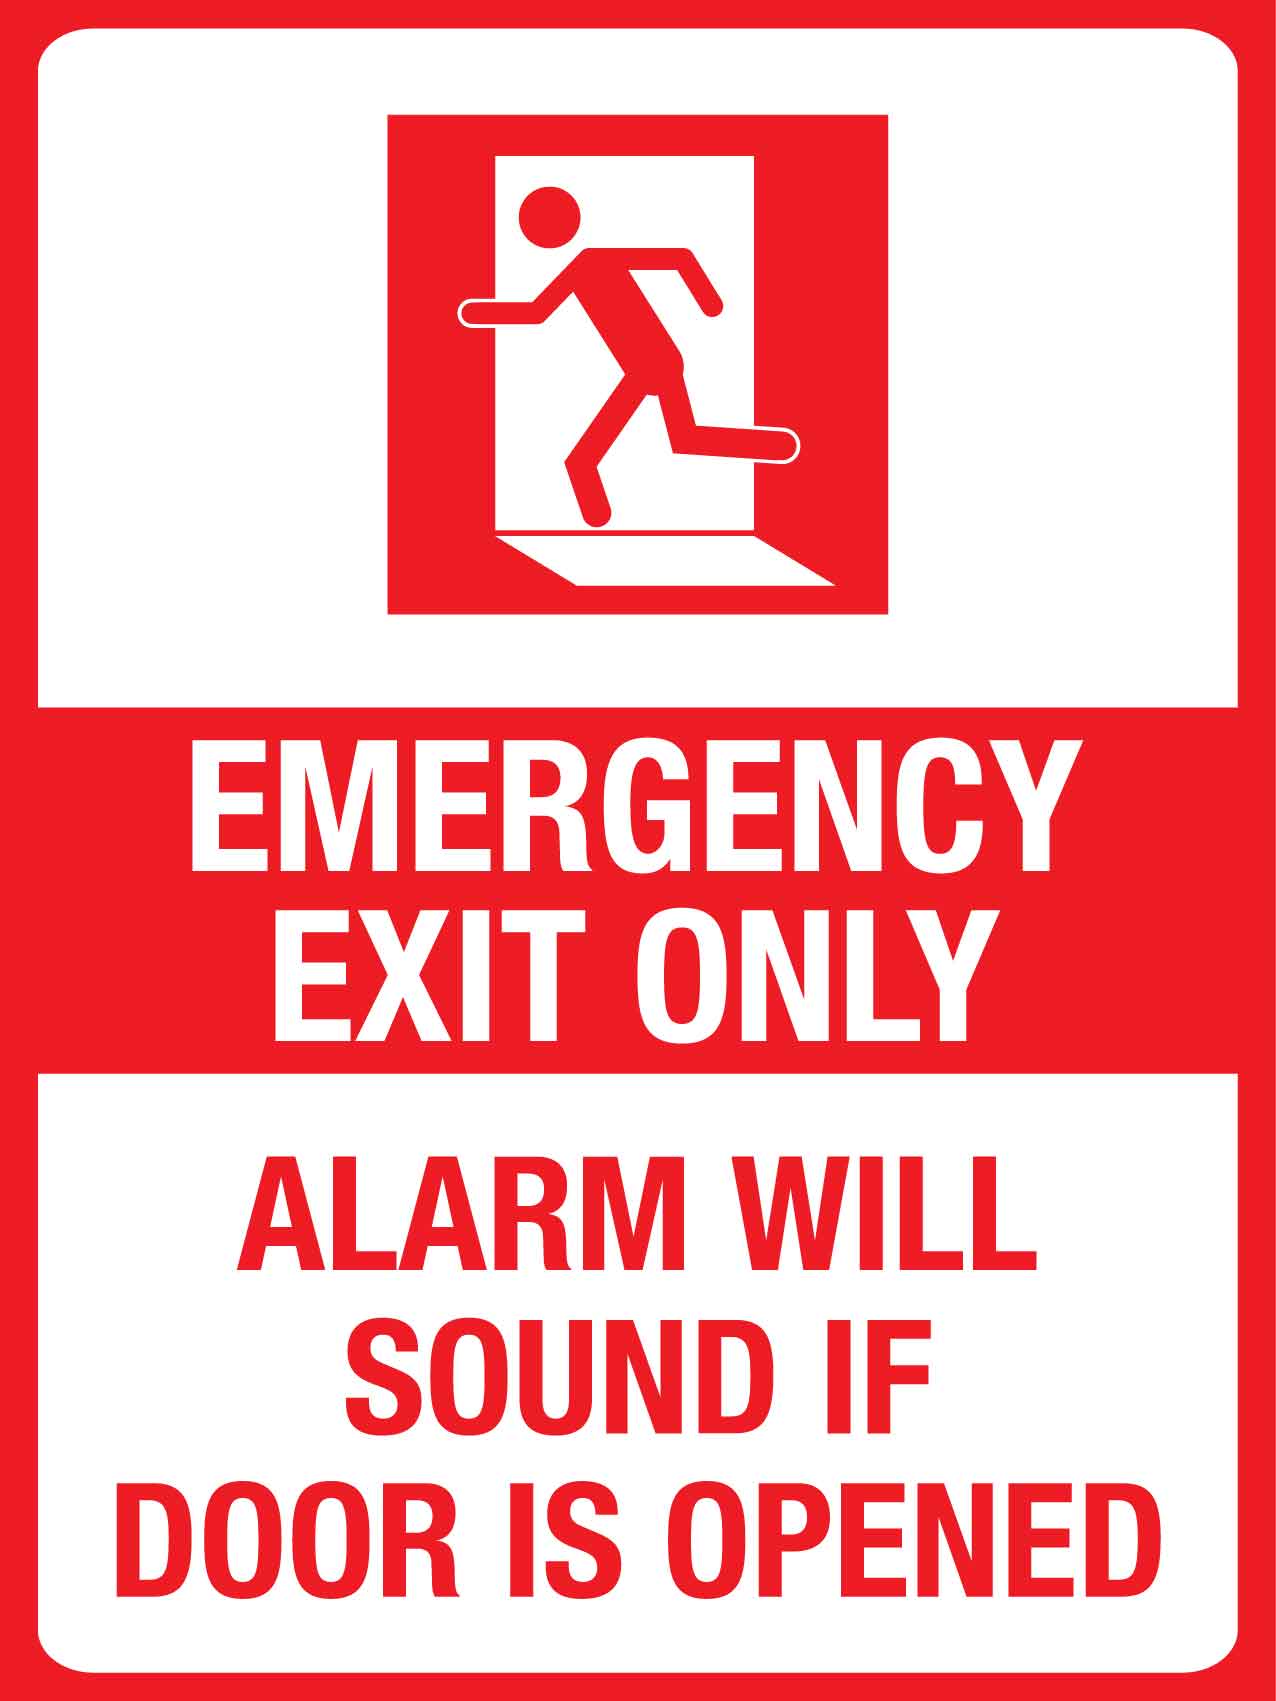 Emergency-Exit-Only-Alarm-Will-Sound_2000x.jpg